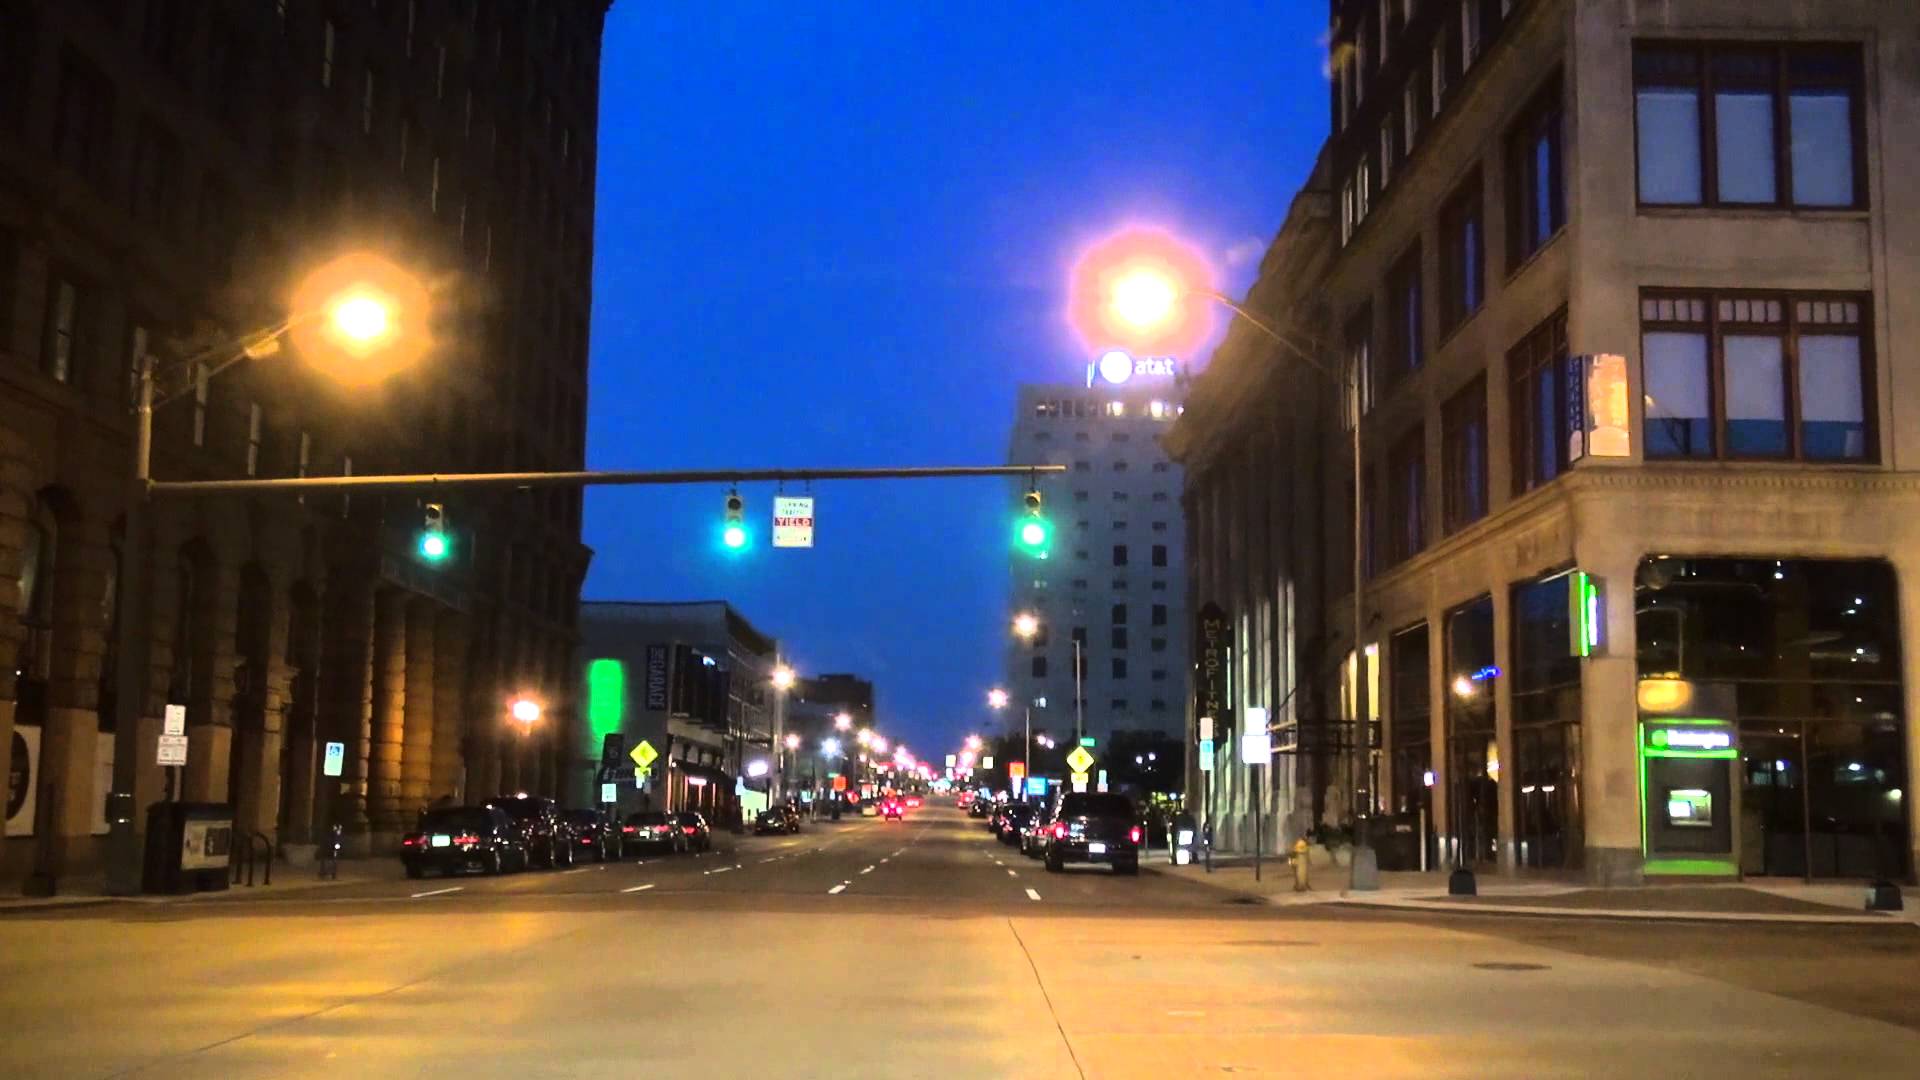 14-28 Columbus Ohio: Downtown at Night - YouTube